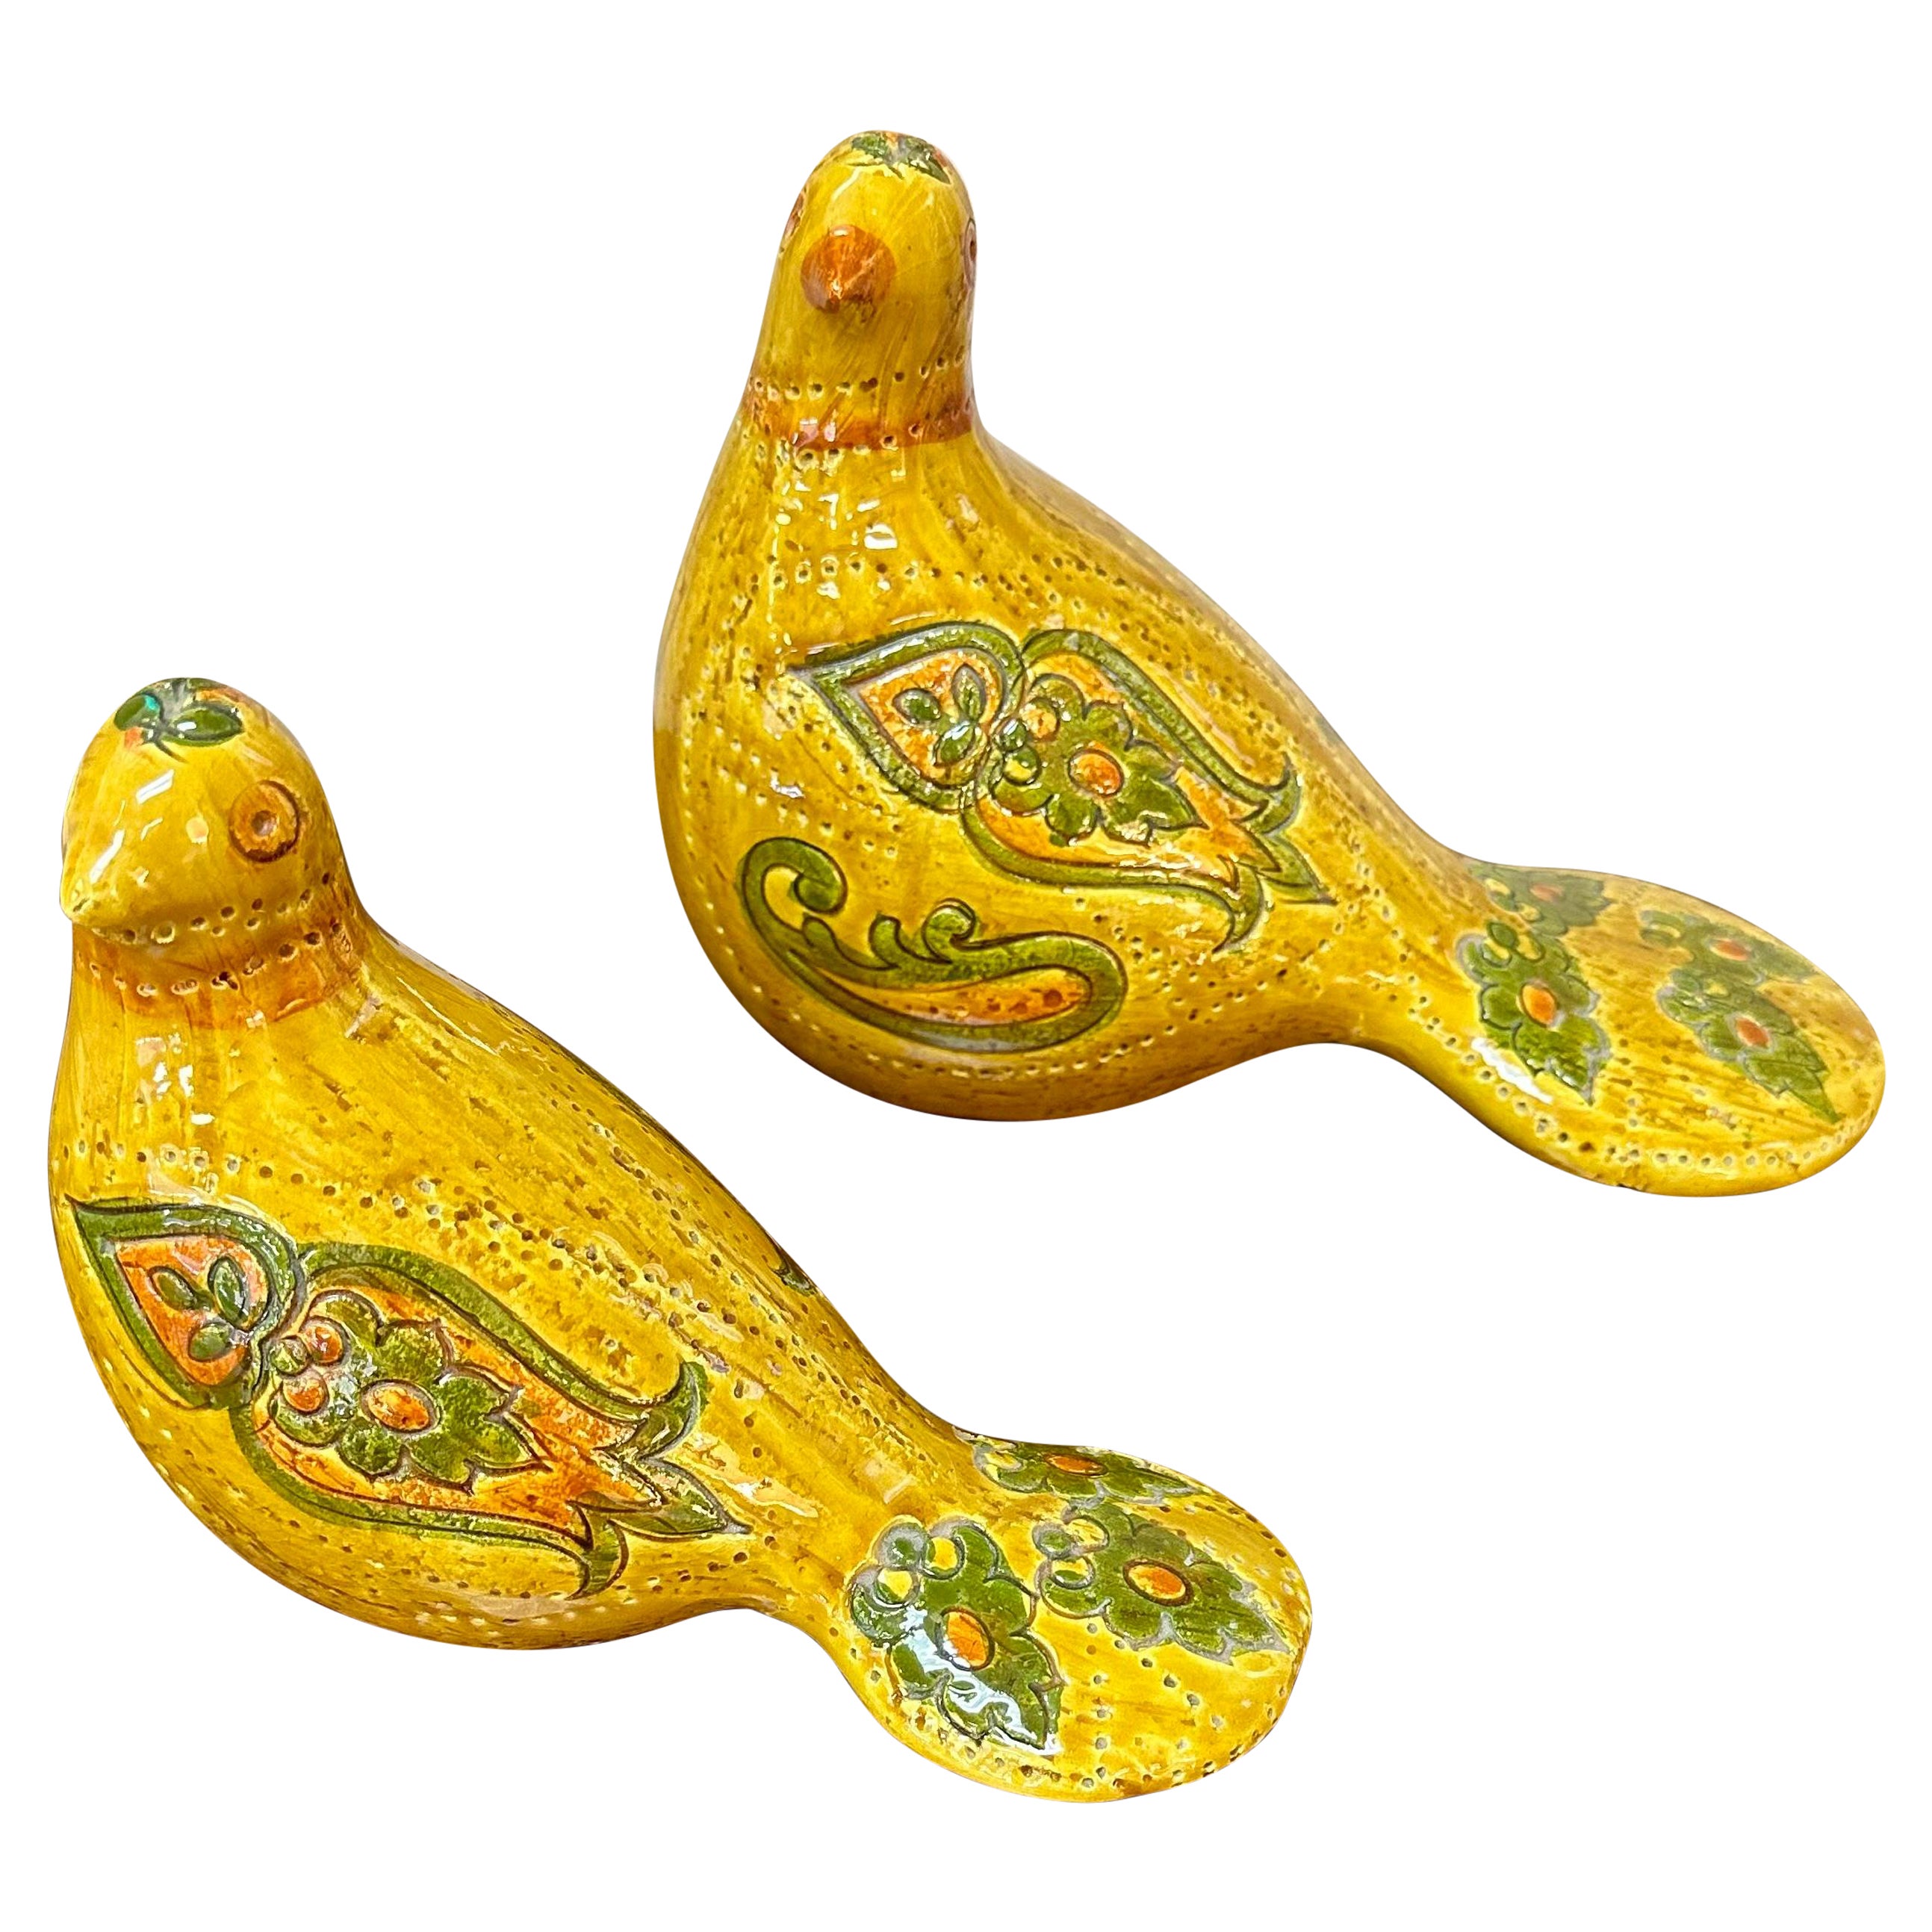 Aldo Londi for Bitossi Pottery Doves, a pair (marked Rosenthal Netter) For Sale